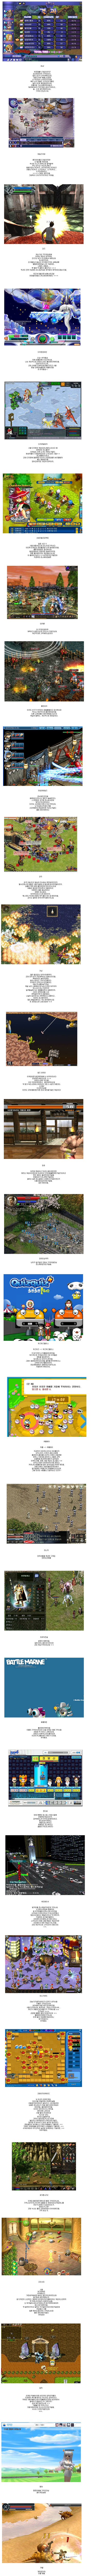 game2.jpg : 추억돋는 옛날 온라인게임.jpg